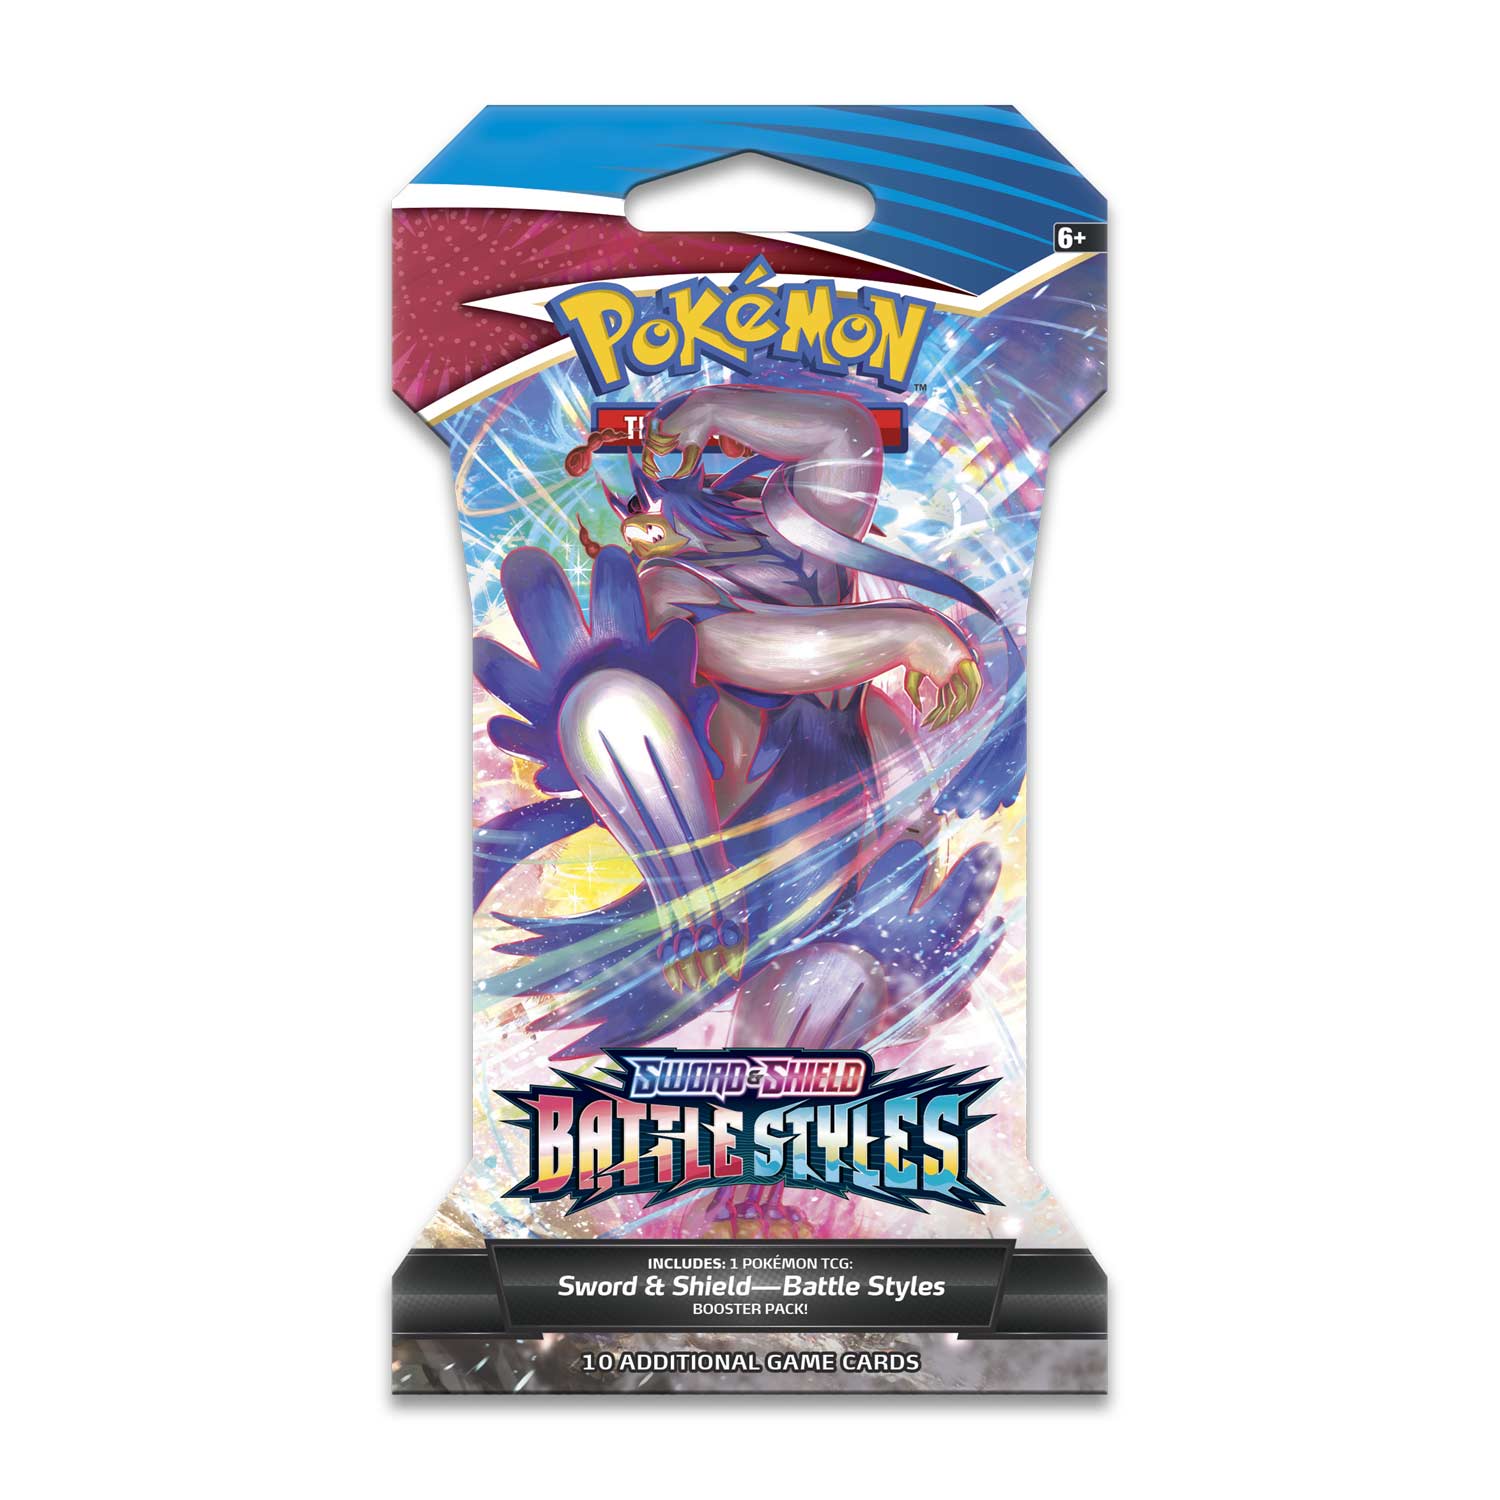 Pokémon Blister Booster Pack for sale online 